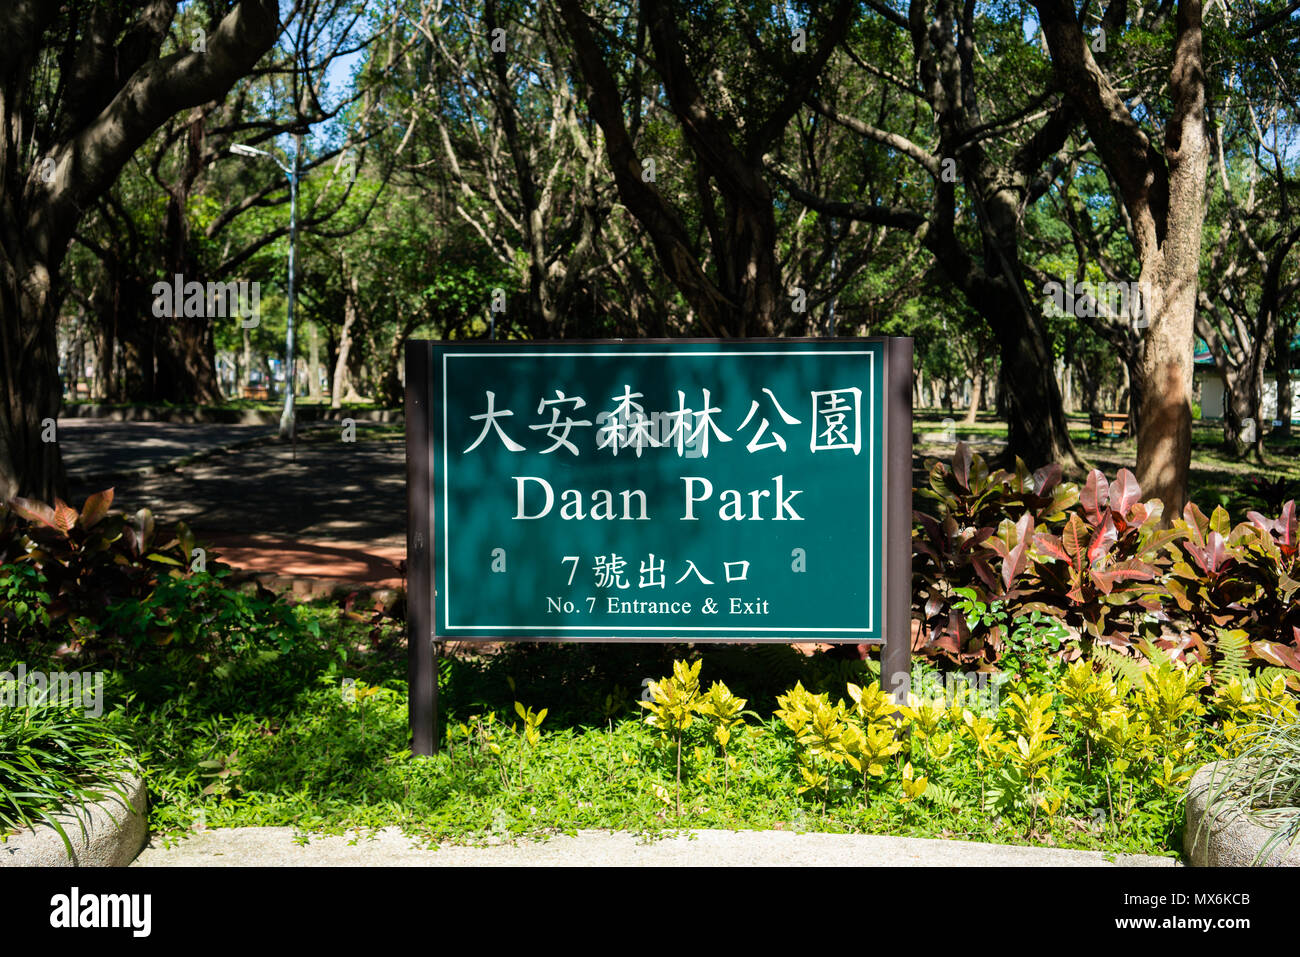 Daan forest park entrance sign in Da'an district Taipei Taiwan Stock Photo